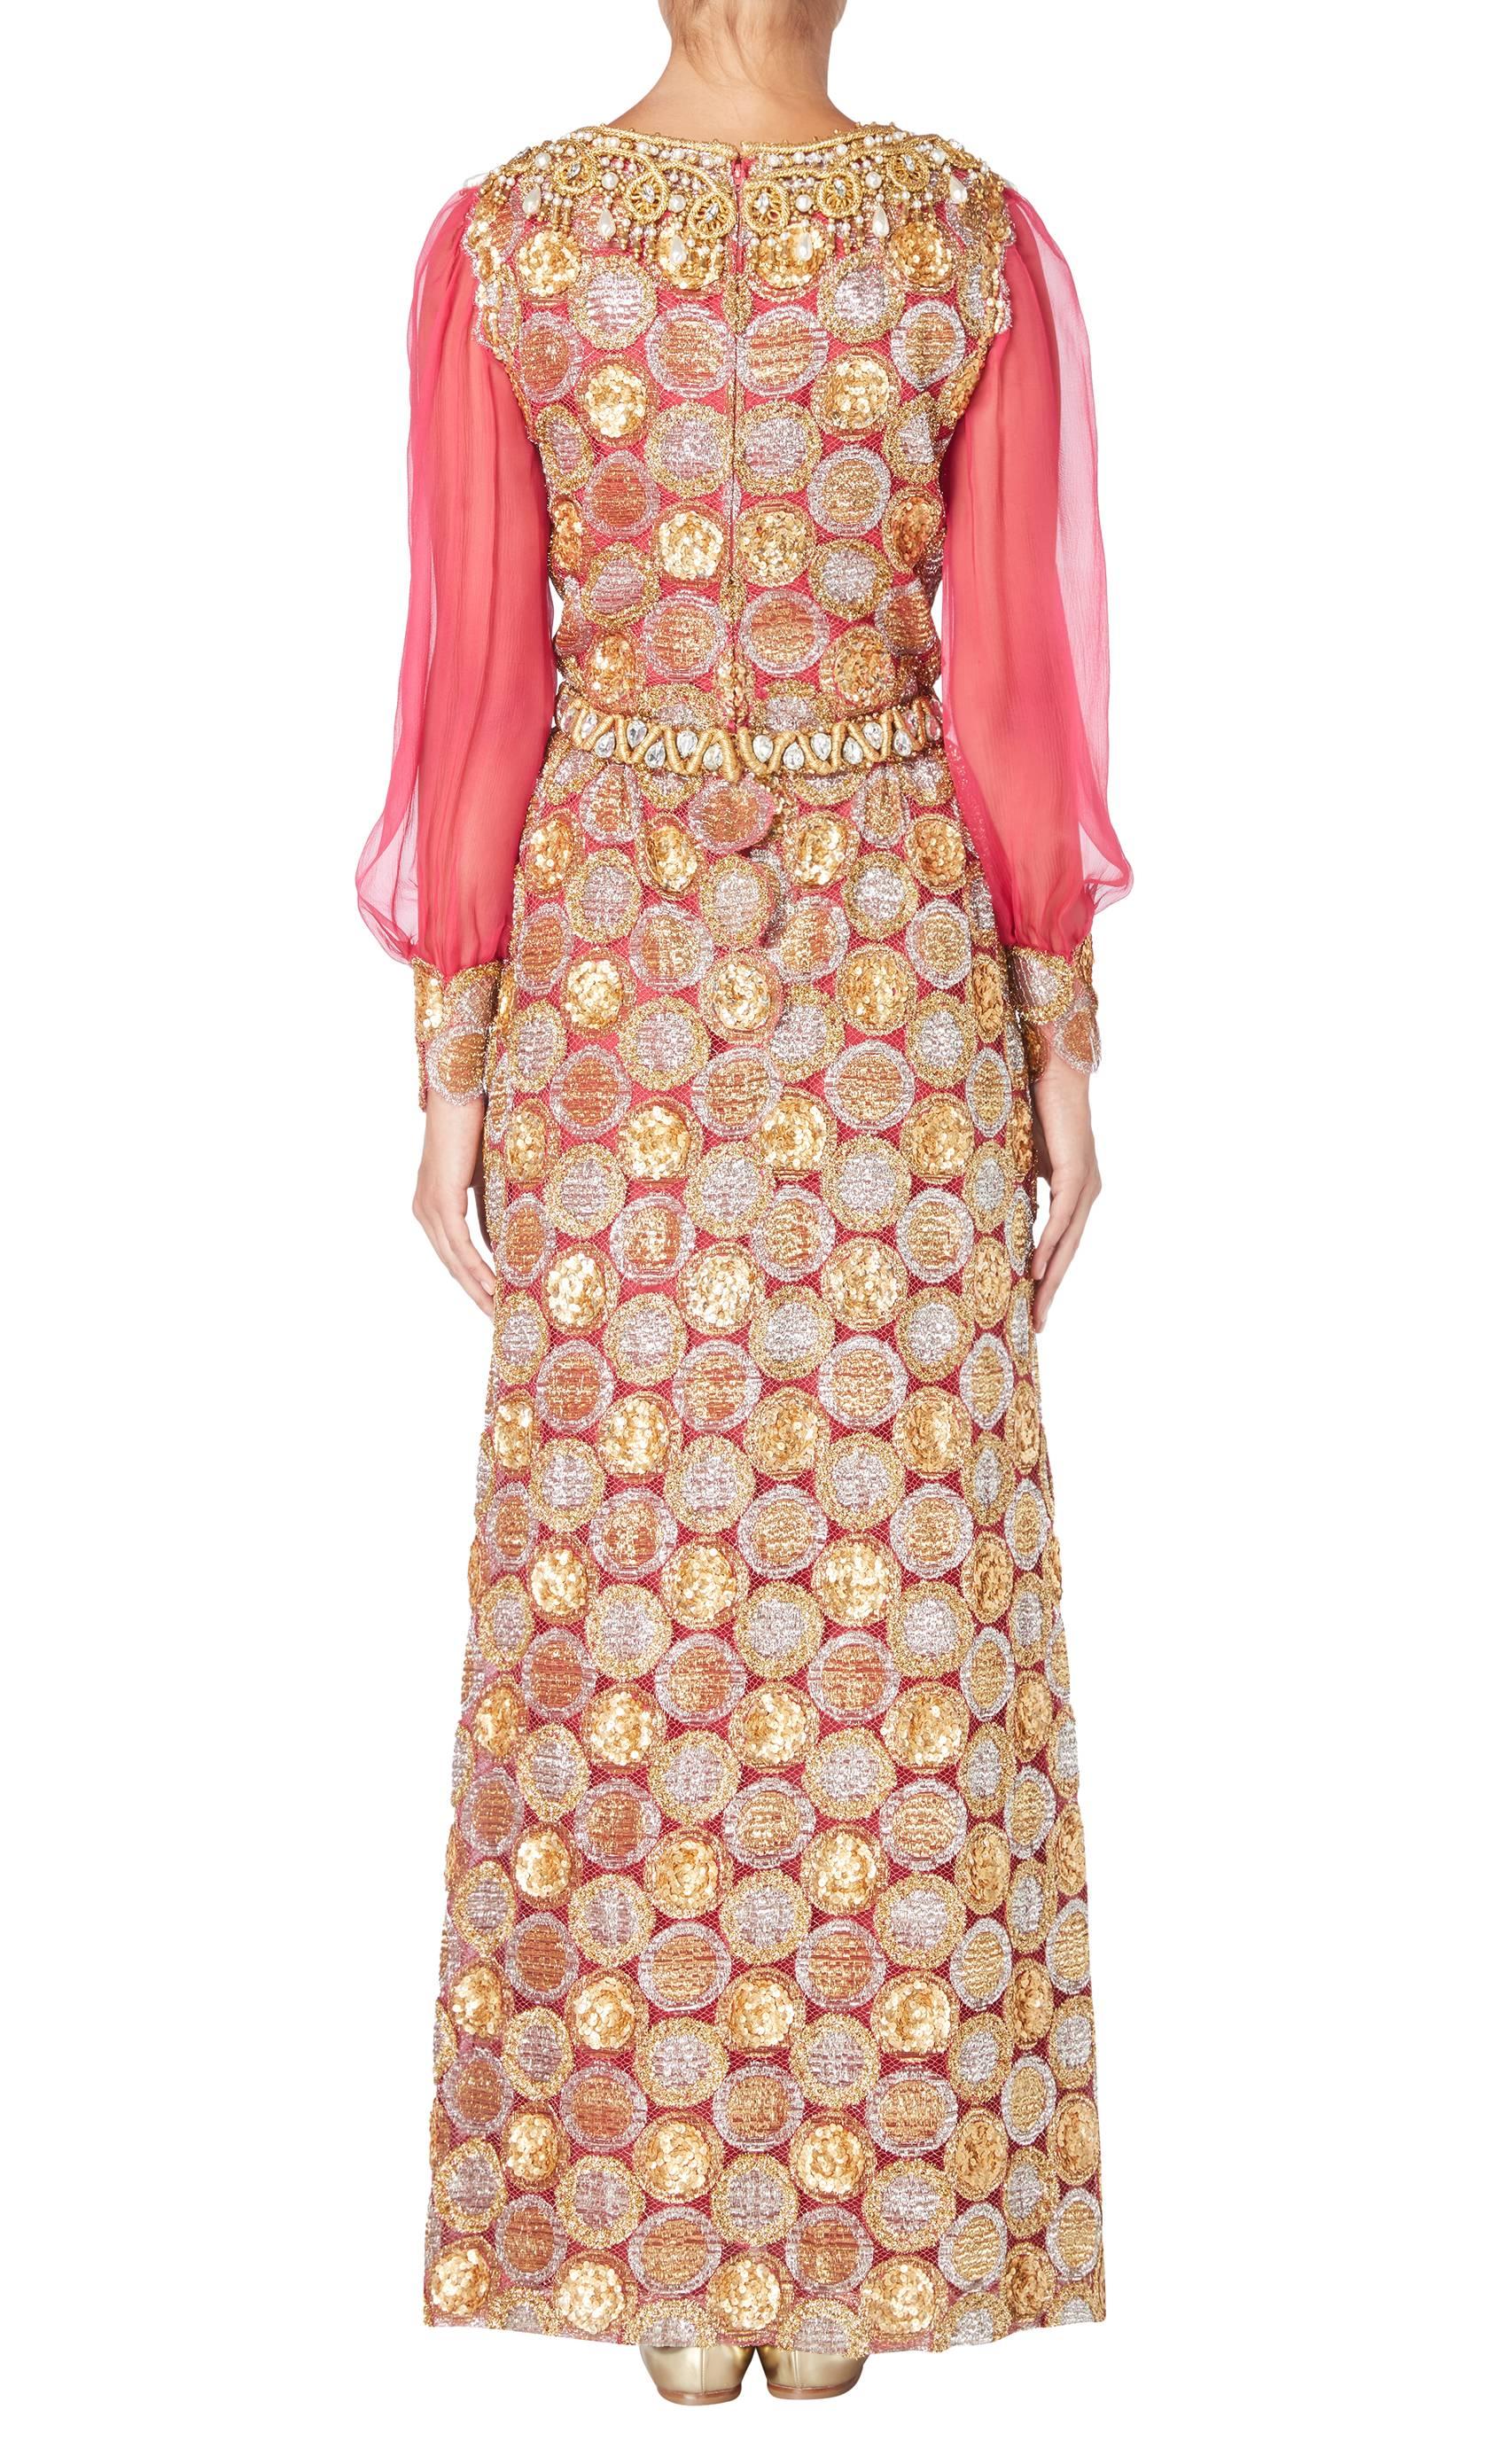 Beige Oscar de la Renta pink and gold dress, Circa 1968 For Sale